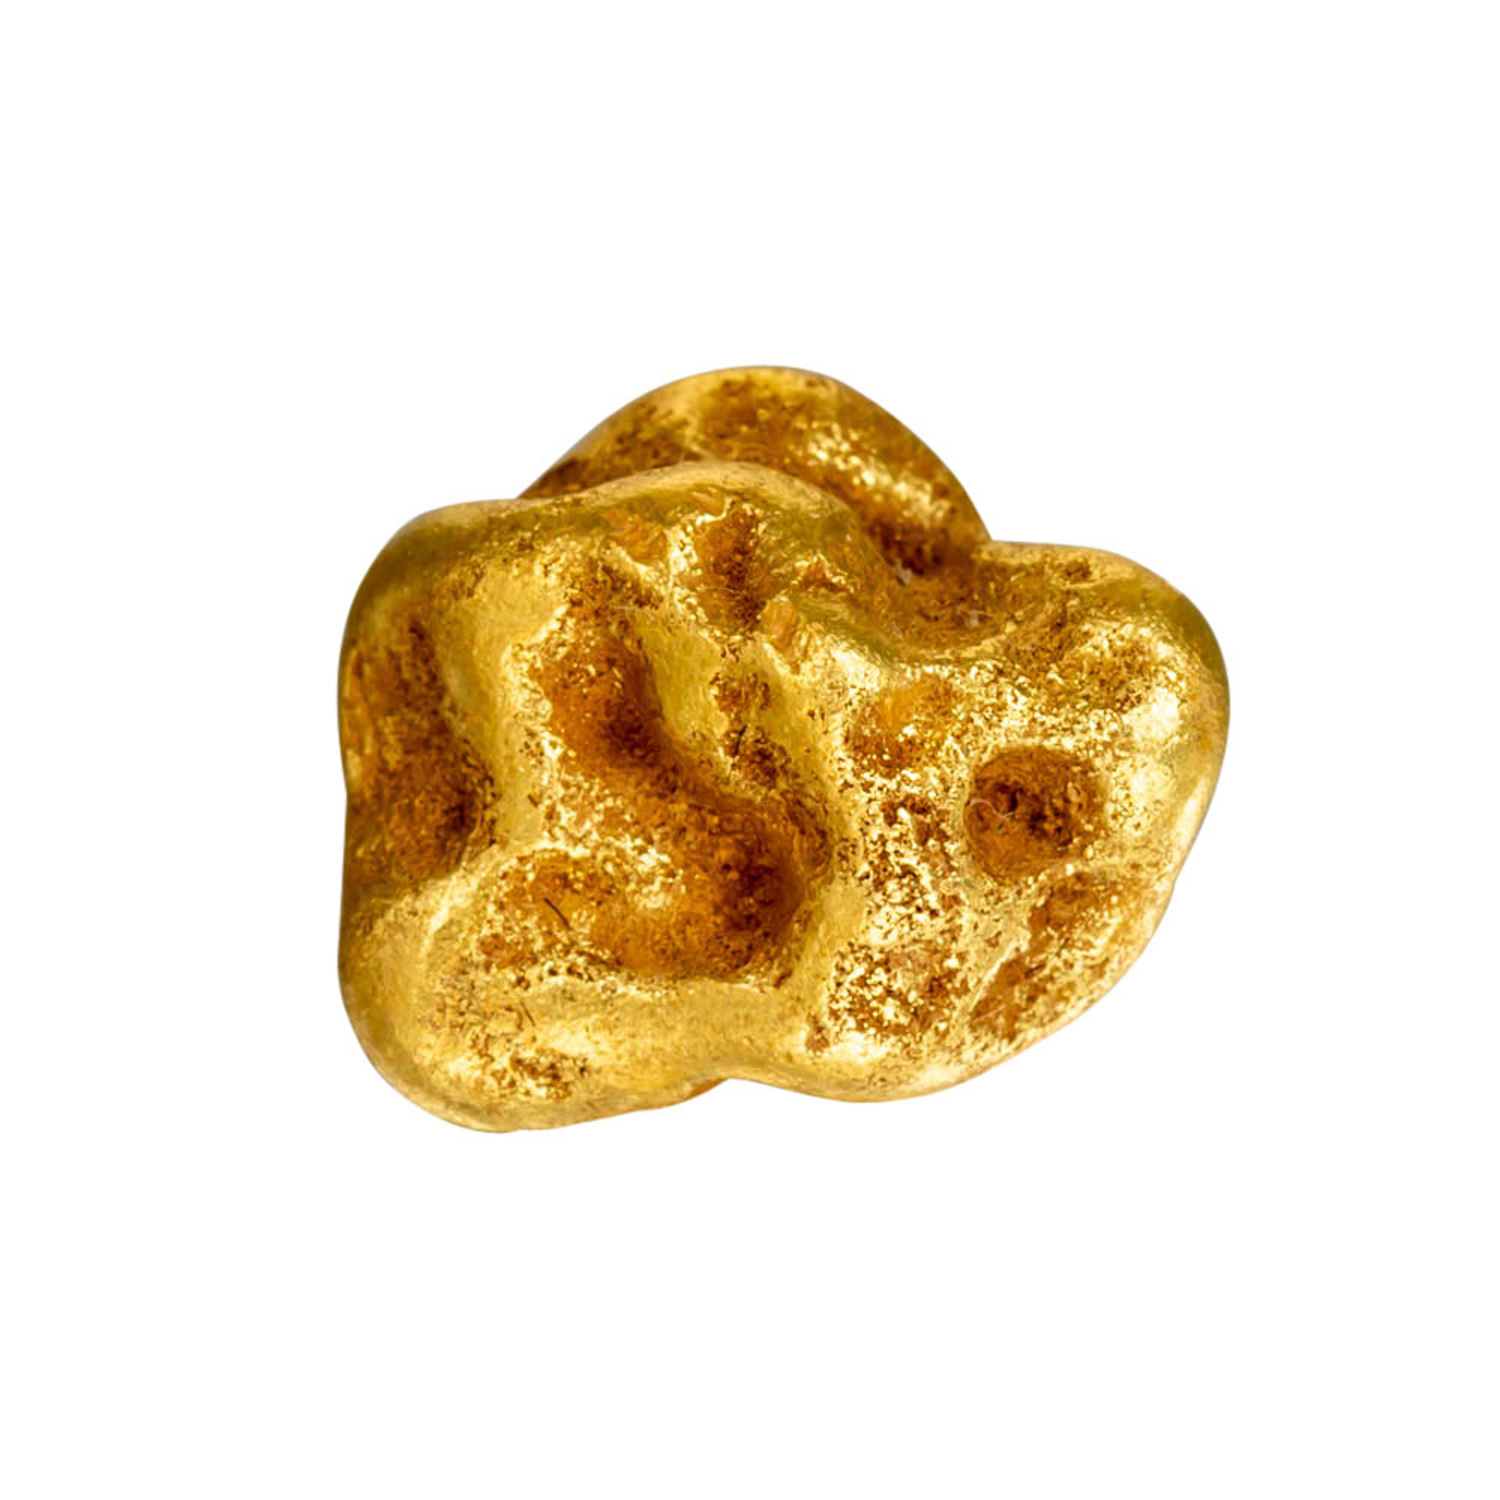 Gold Nugget, 6,83 Gramm, Australien, - Image 2 of 4